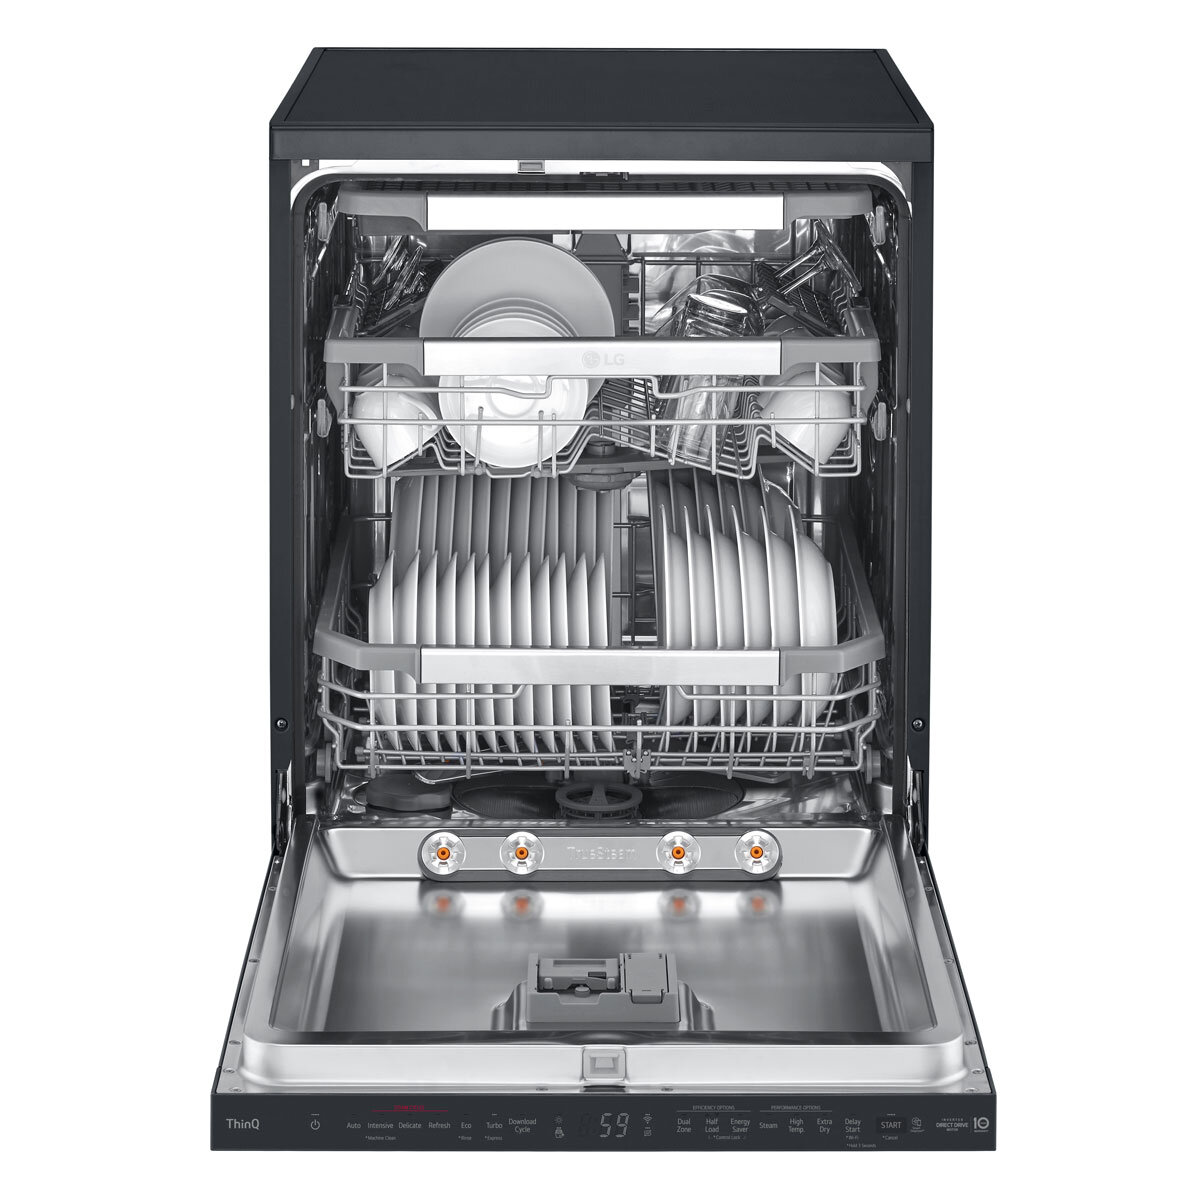 LG DF455HMS  14 Place setting dishwasher in Matte Black